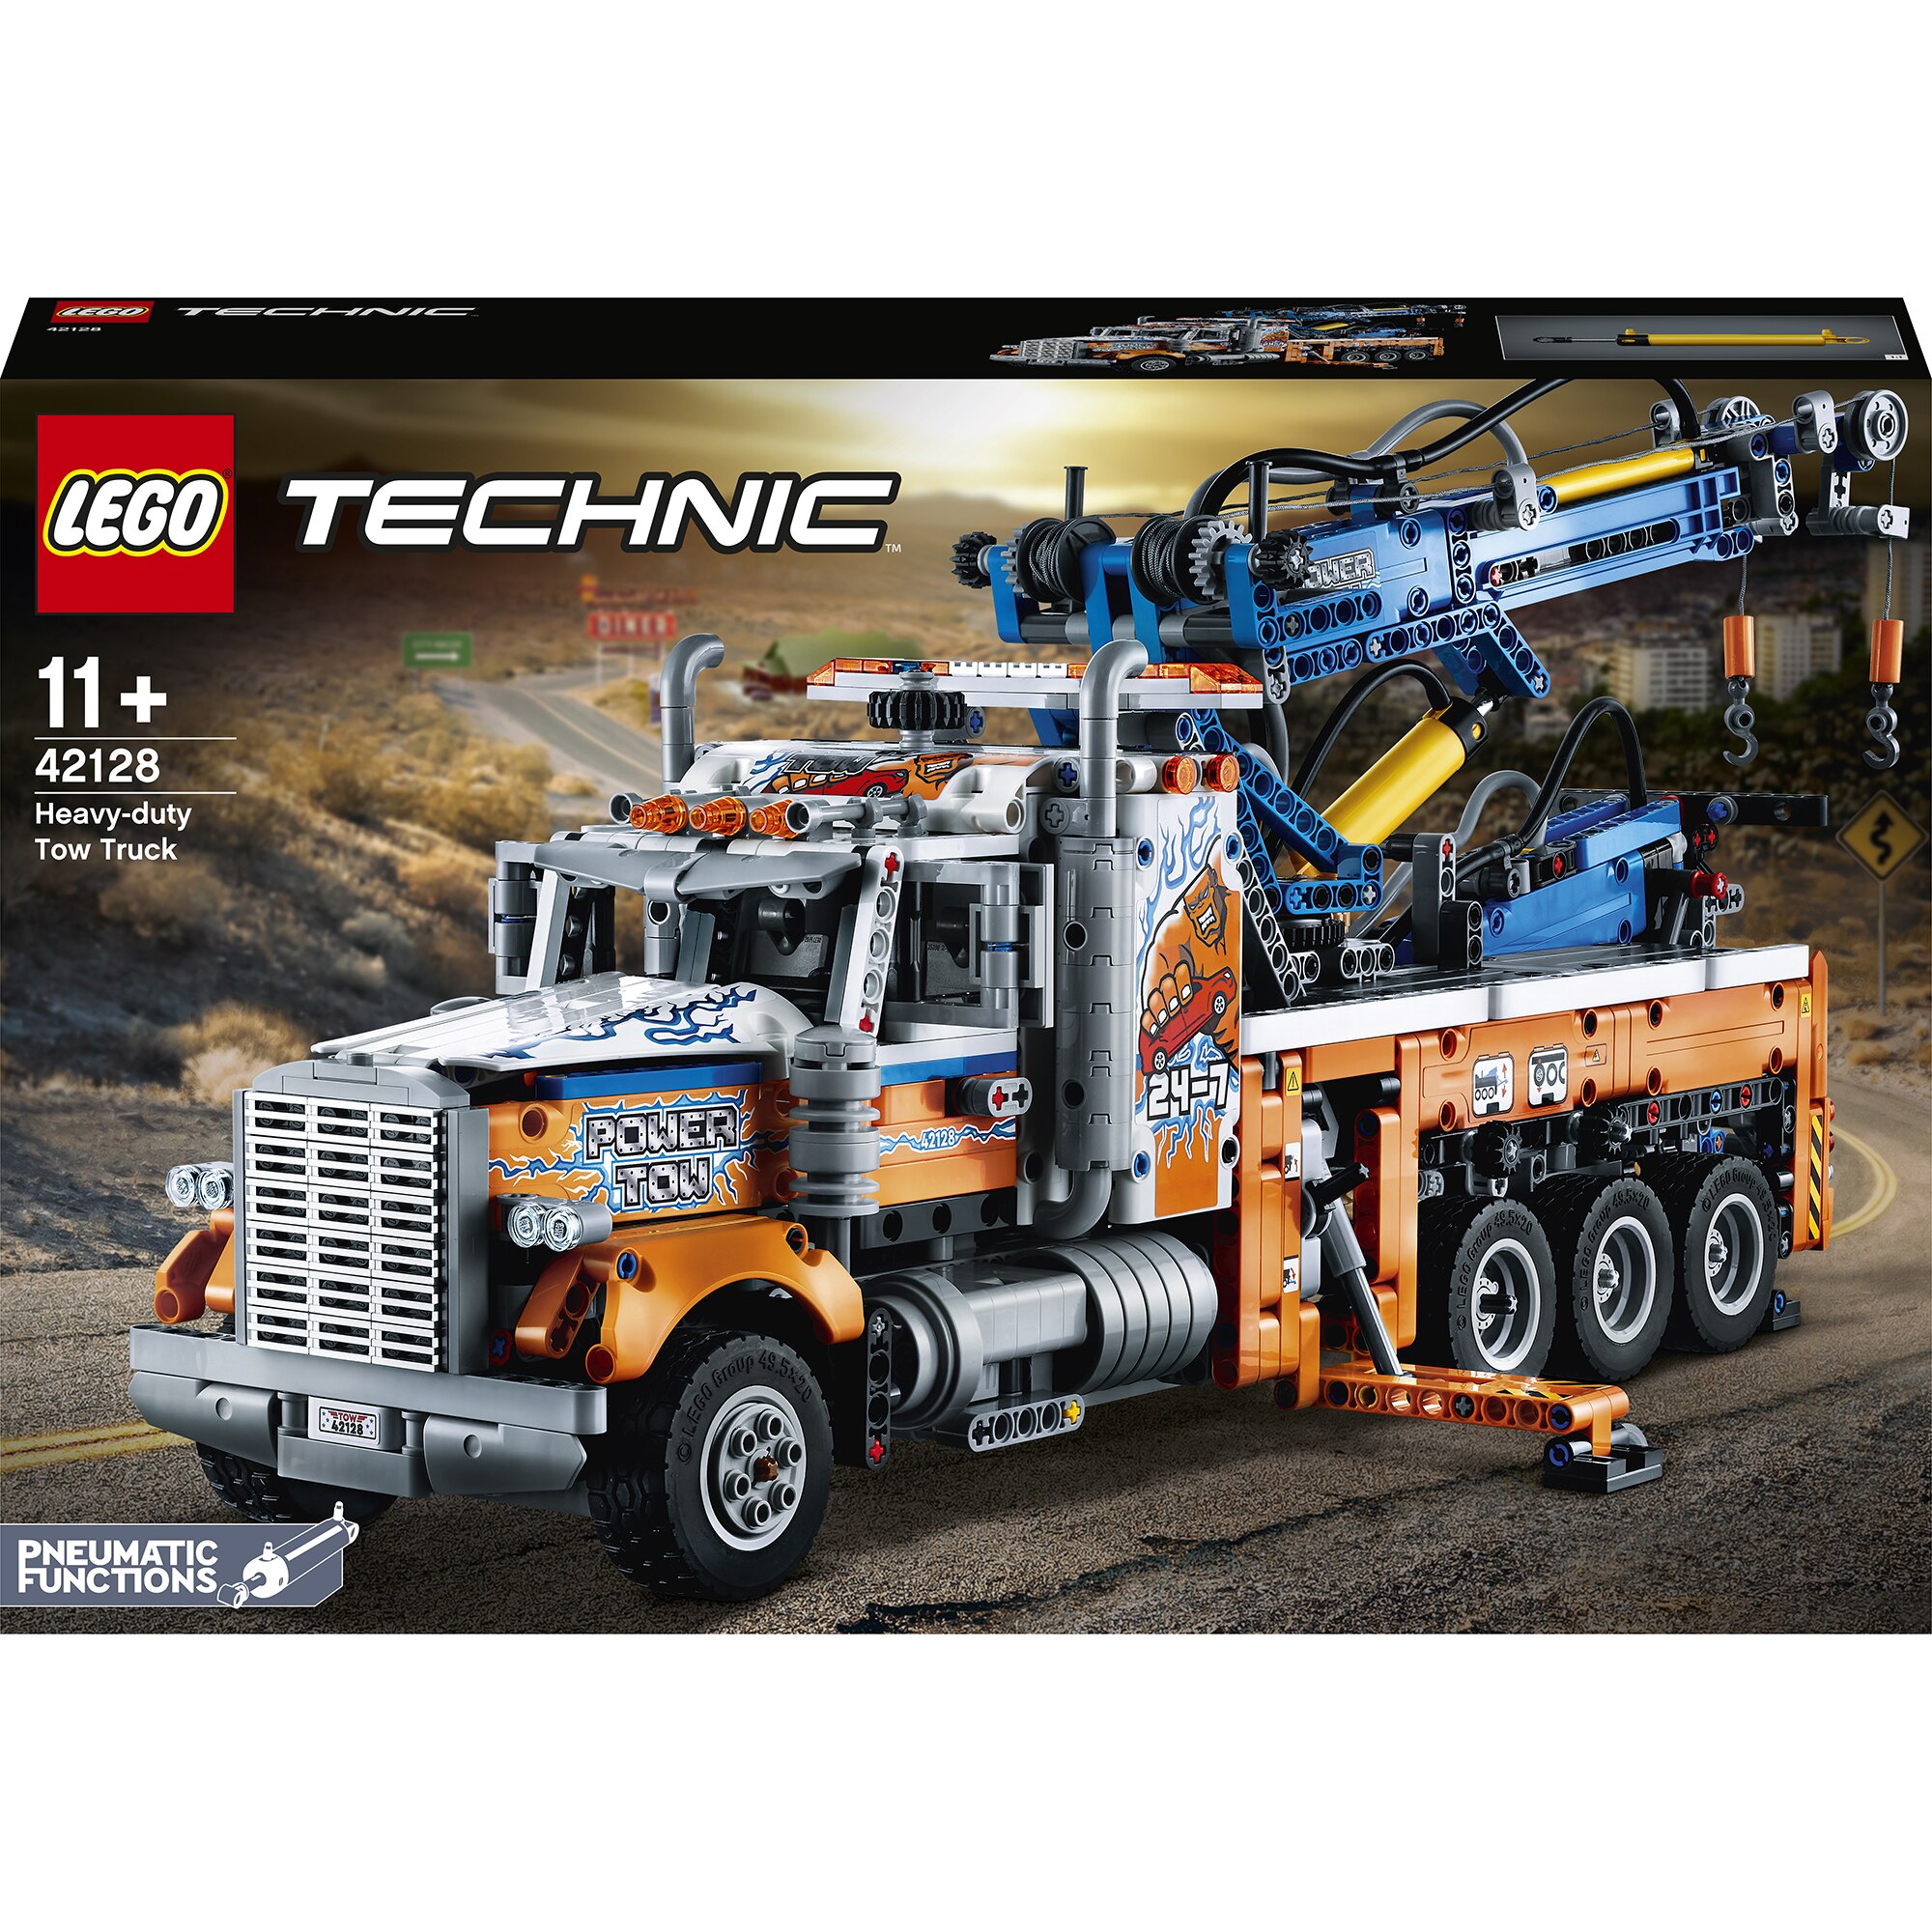 Fotografie LEGO Technic - Camion de remorcare de mare tonaj 42128, 2017 piese